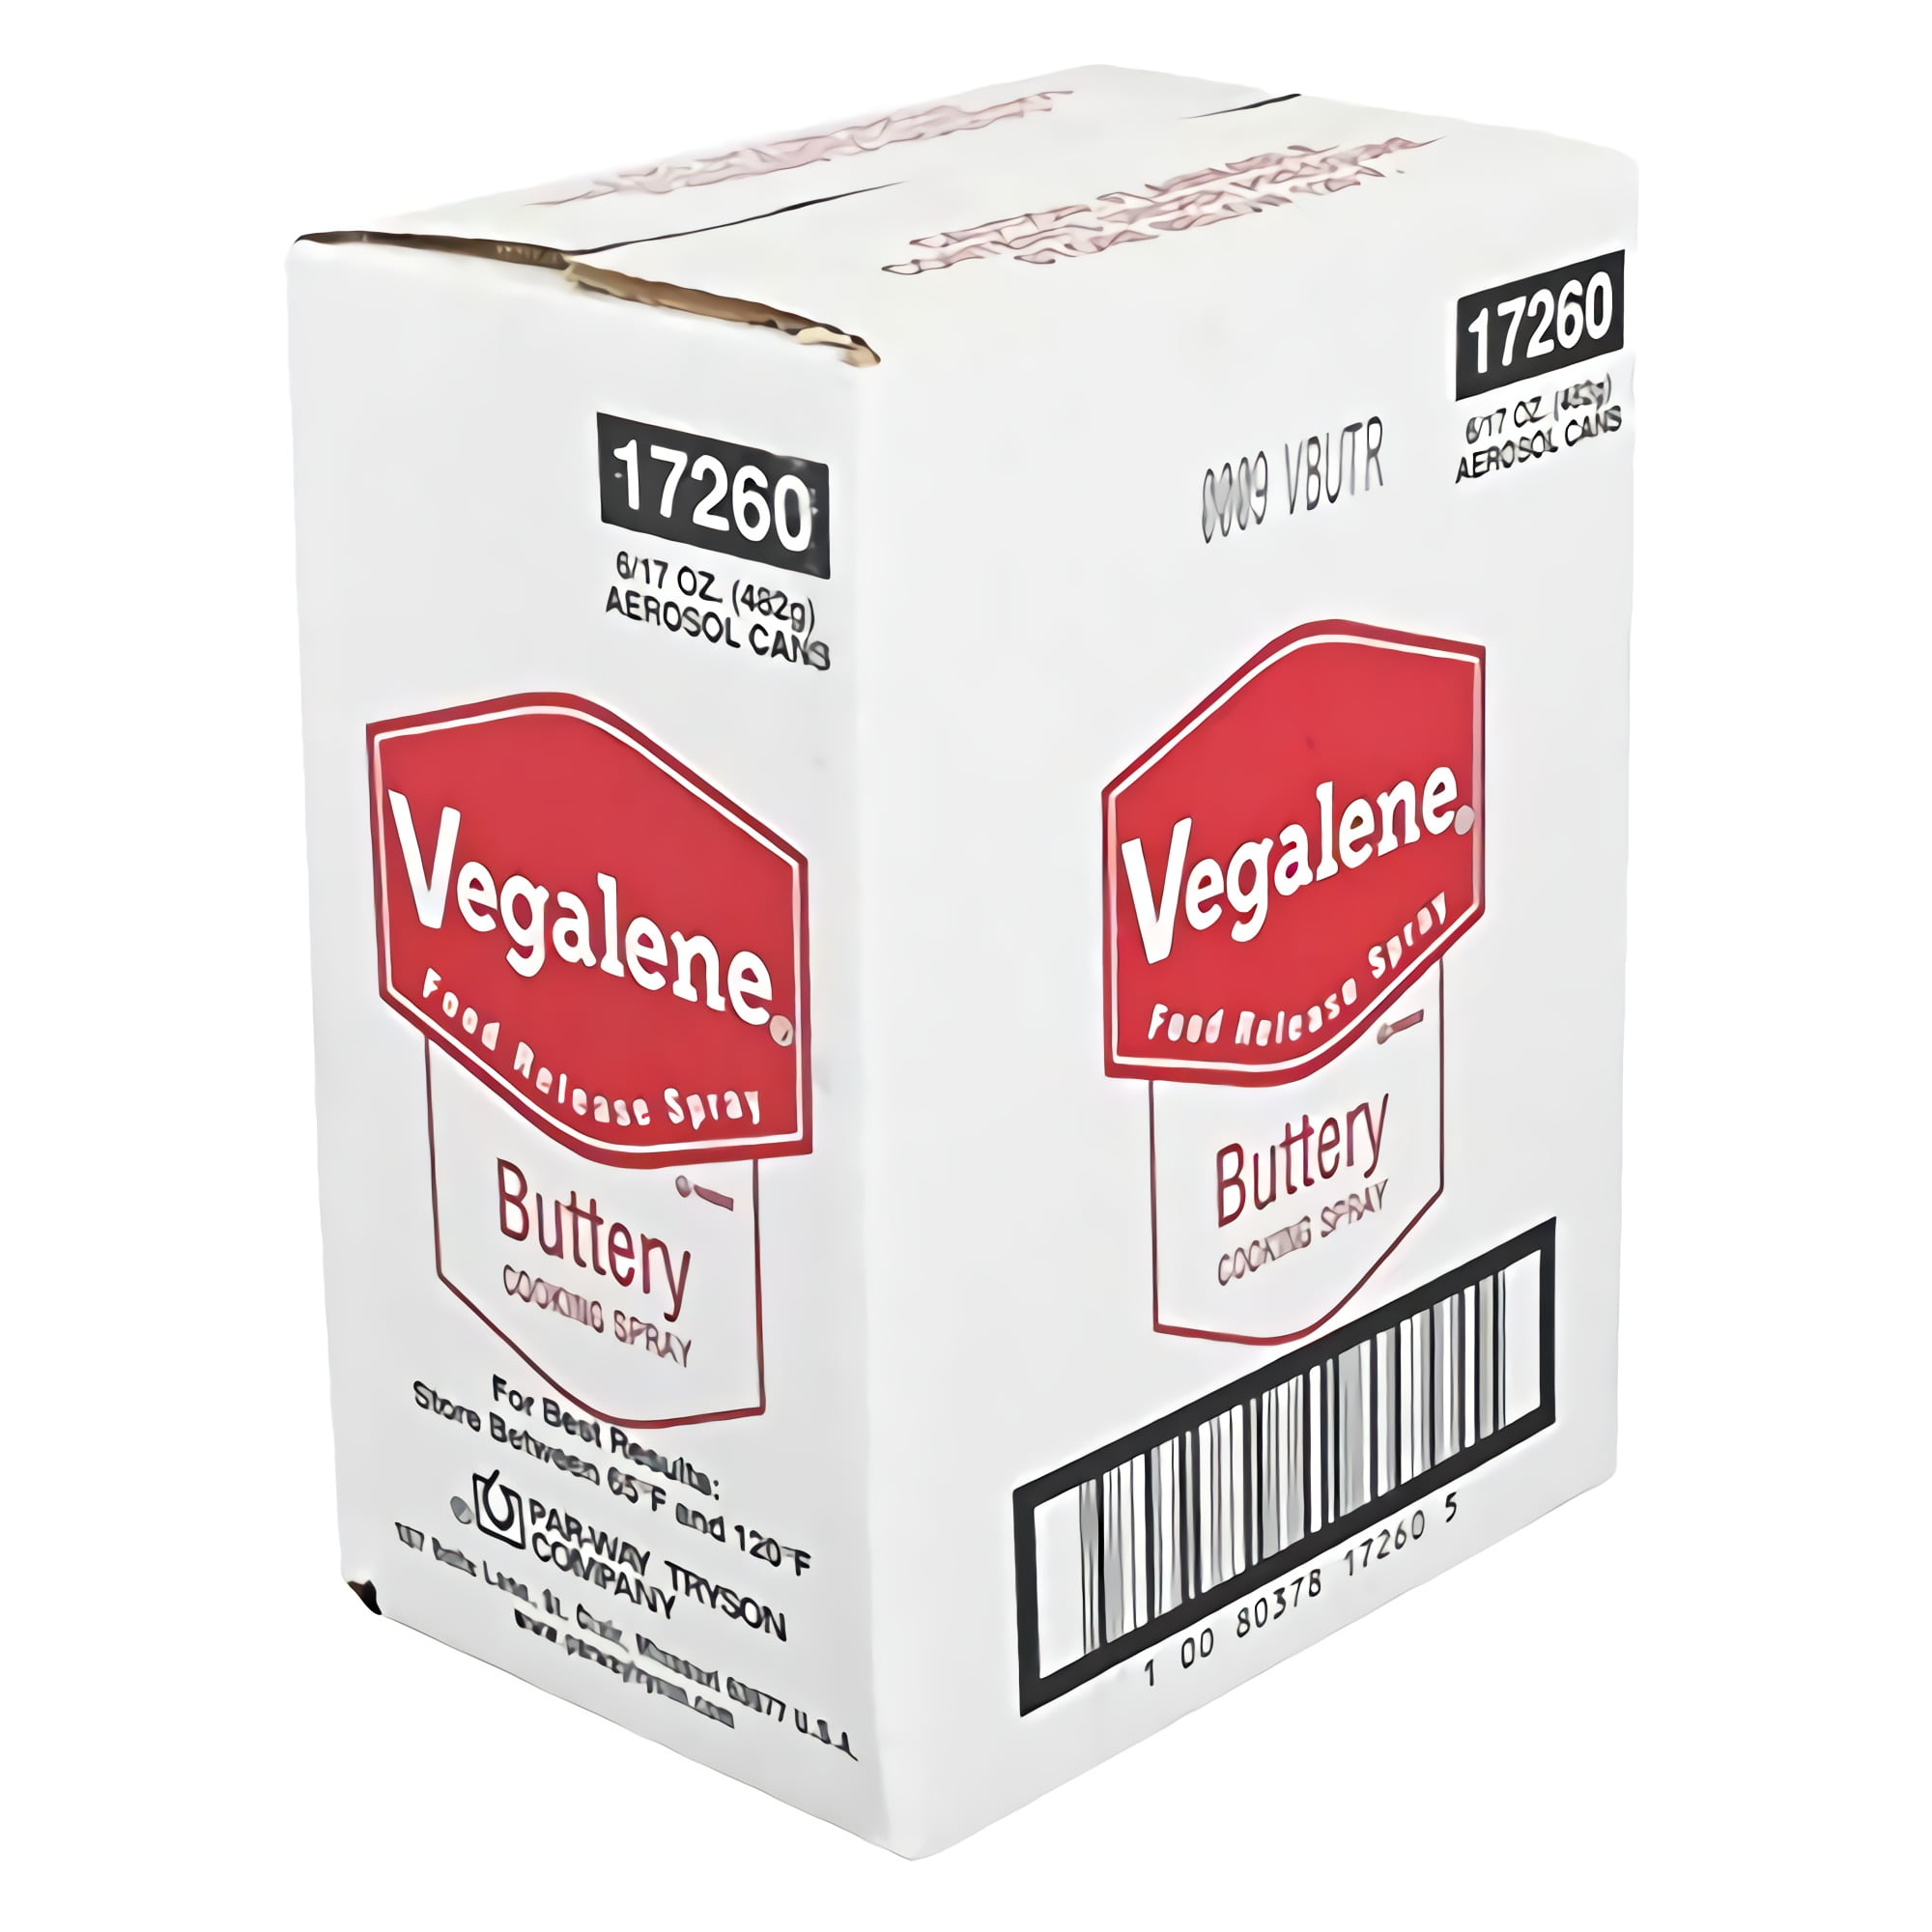 Vegalene® Grid Iron Non-Stick Spray - Vegalene